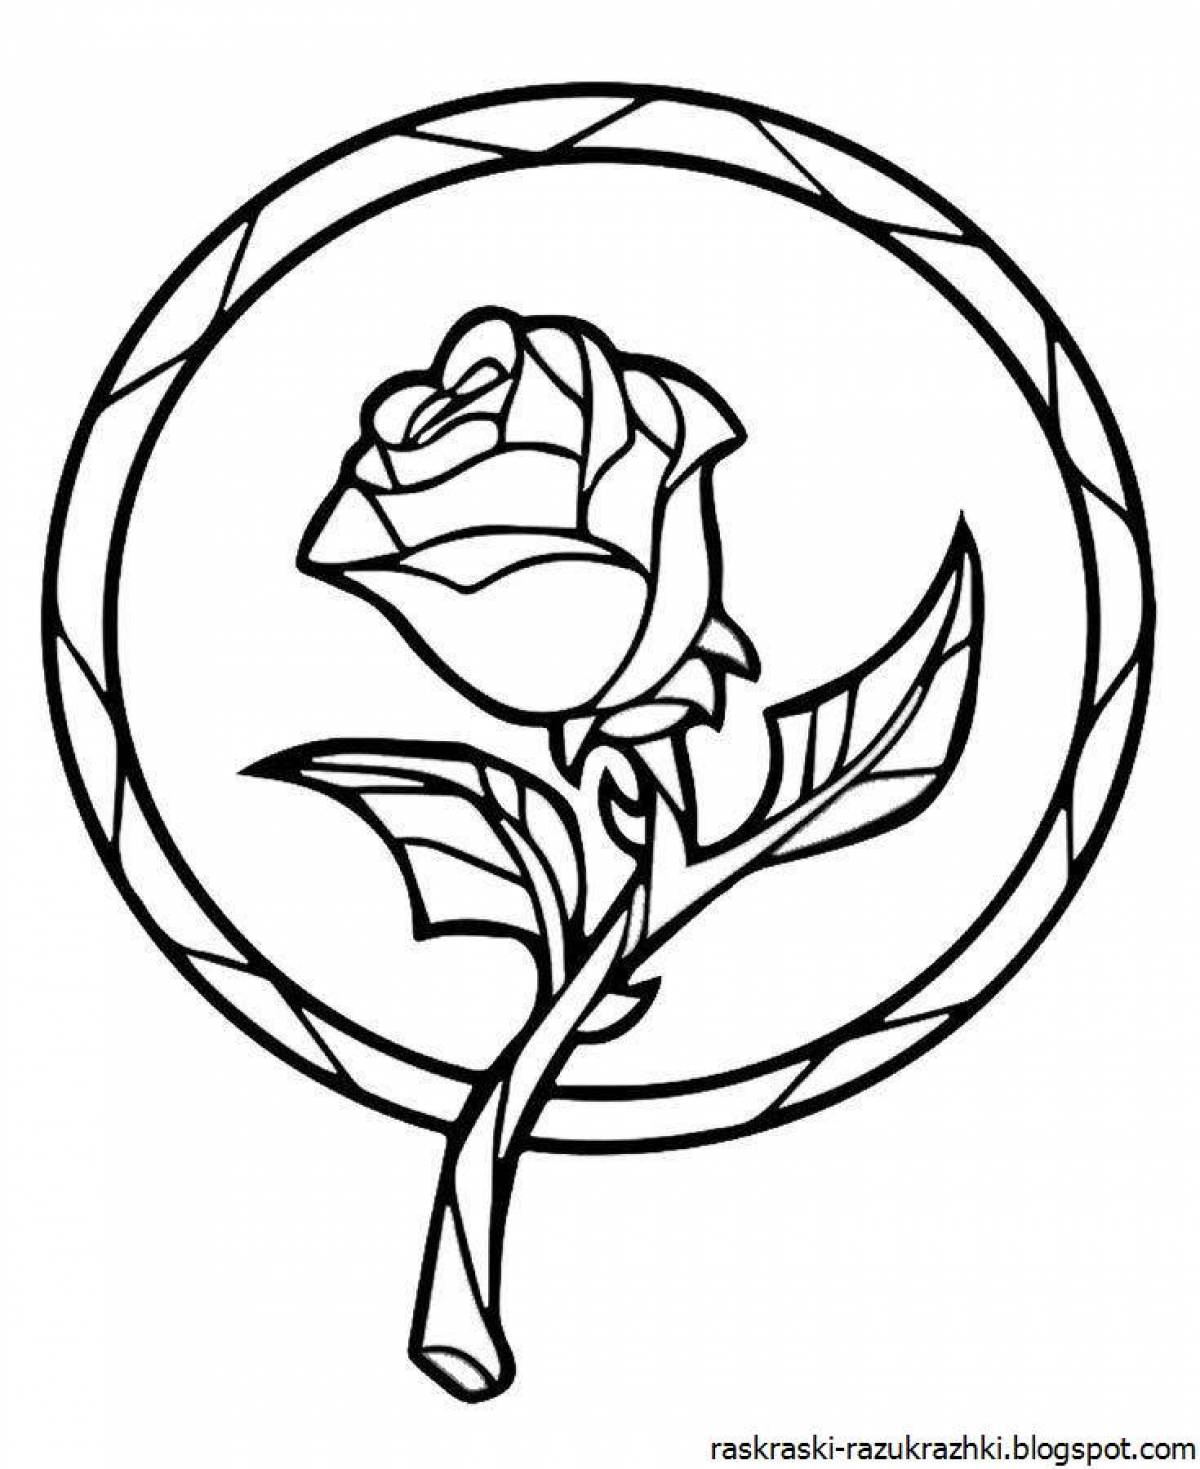 Изысканная раскраска роза для детей